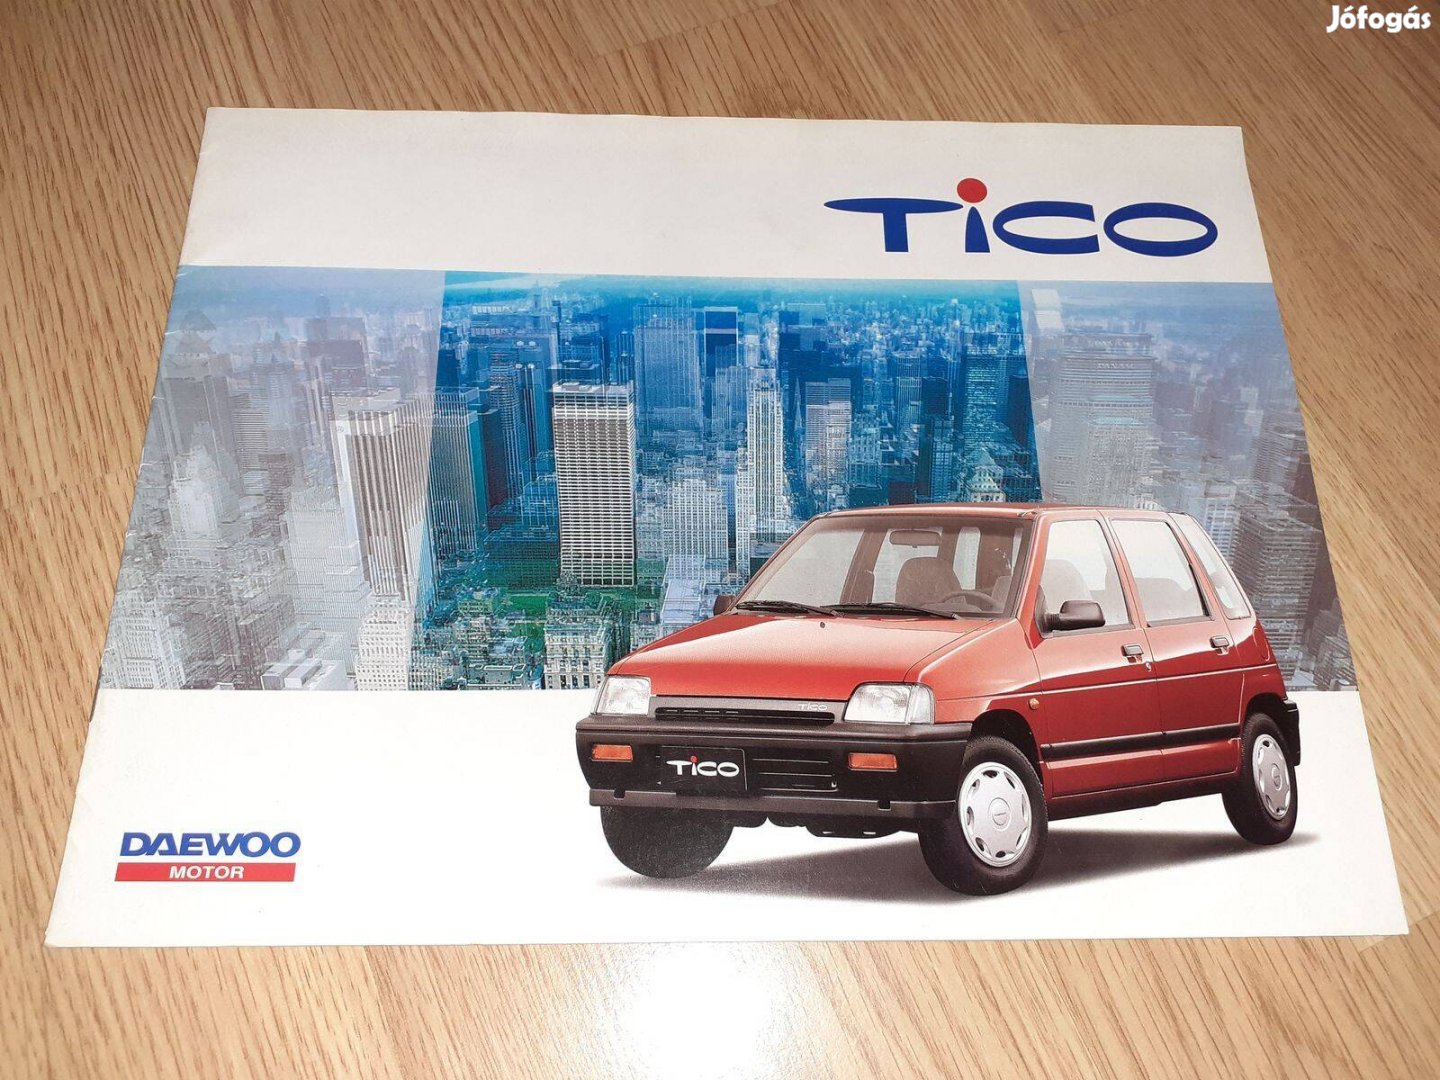 Daewoo Tico prospektus - 1995, angol nyelvű